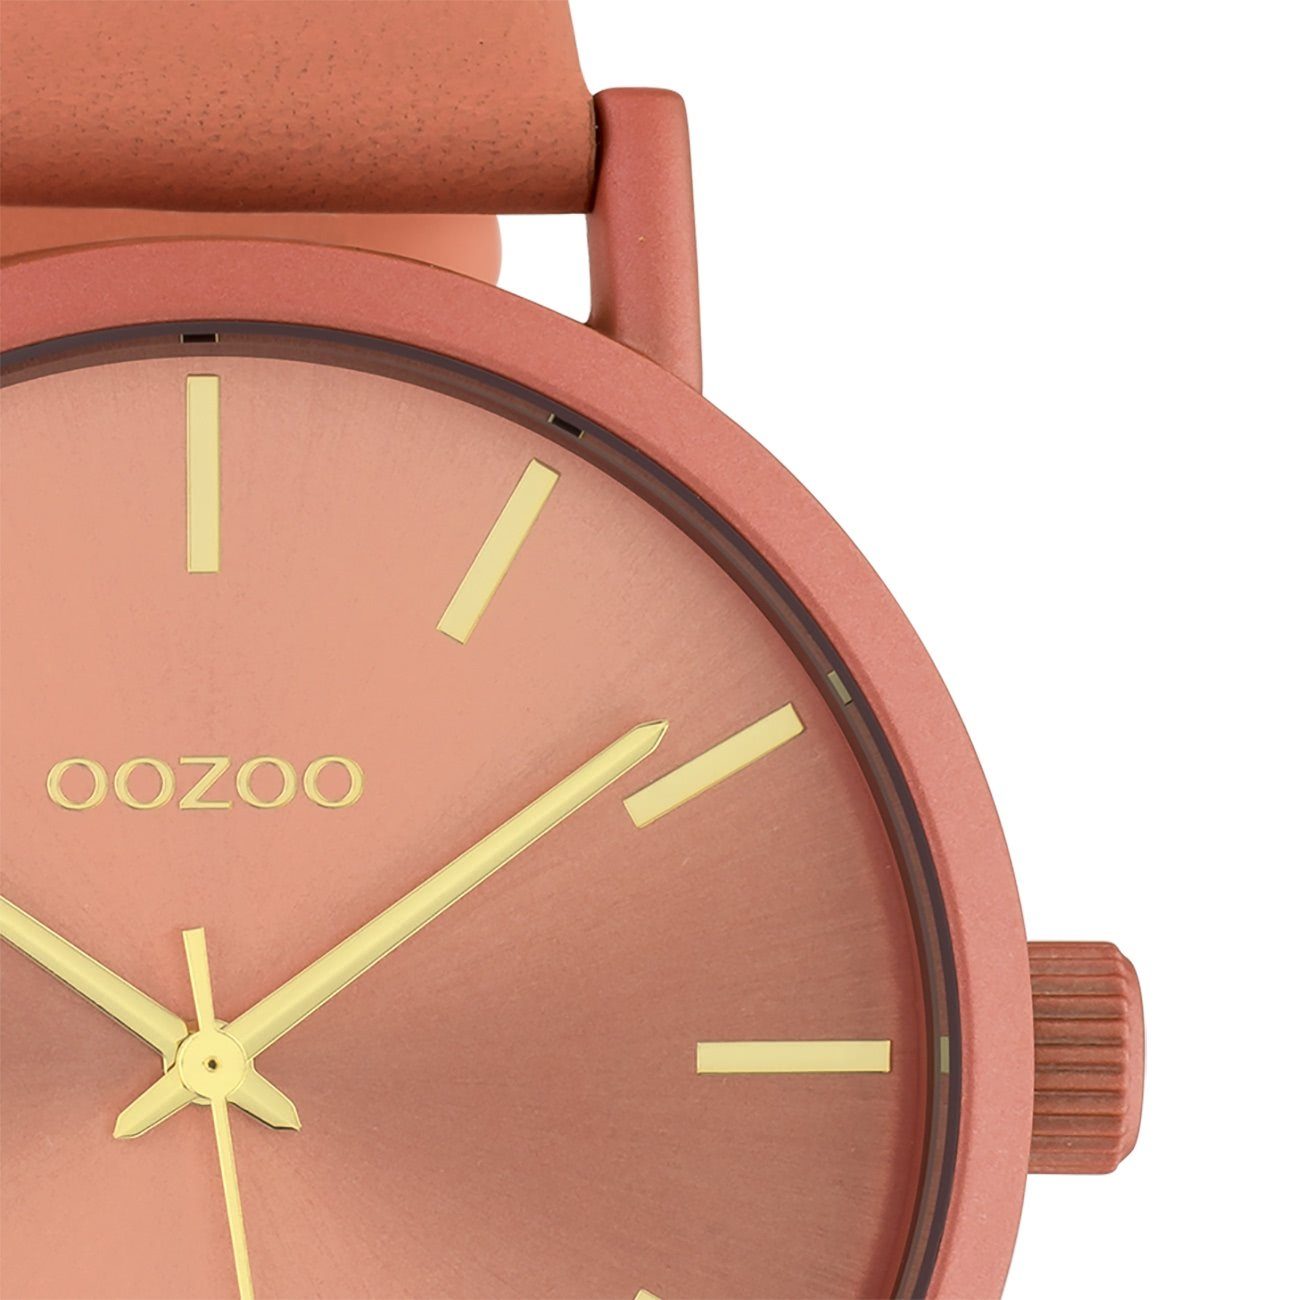 Oozoo orange, Fashion Timepieces, groß Damen Lederarmband rund, Quarzuhr OOZOO OOZOO 42mm), Damenuhr Armbanduhr (ca.